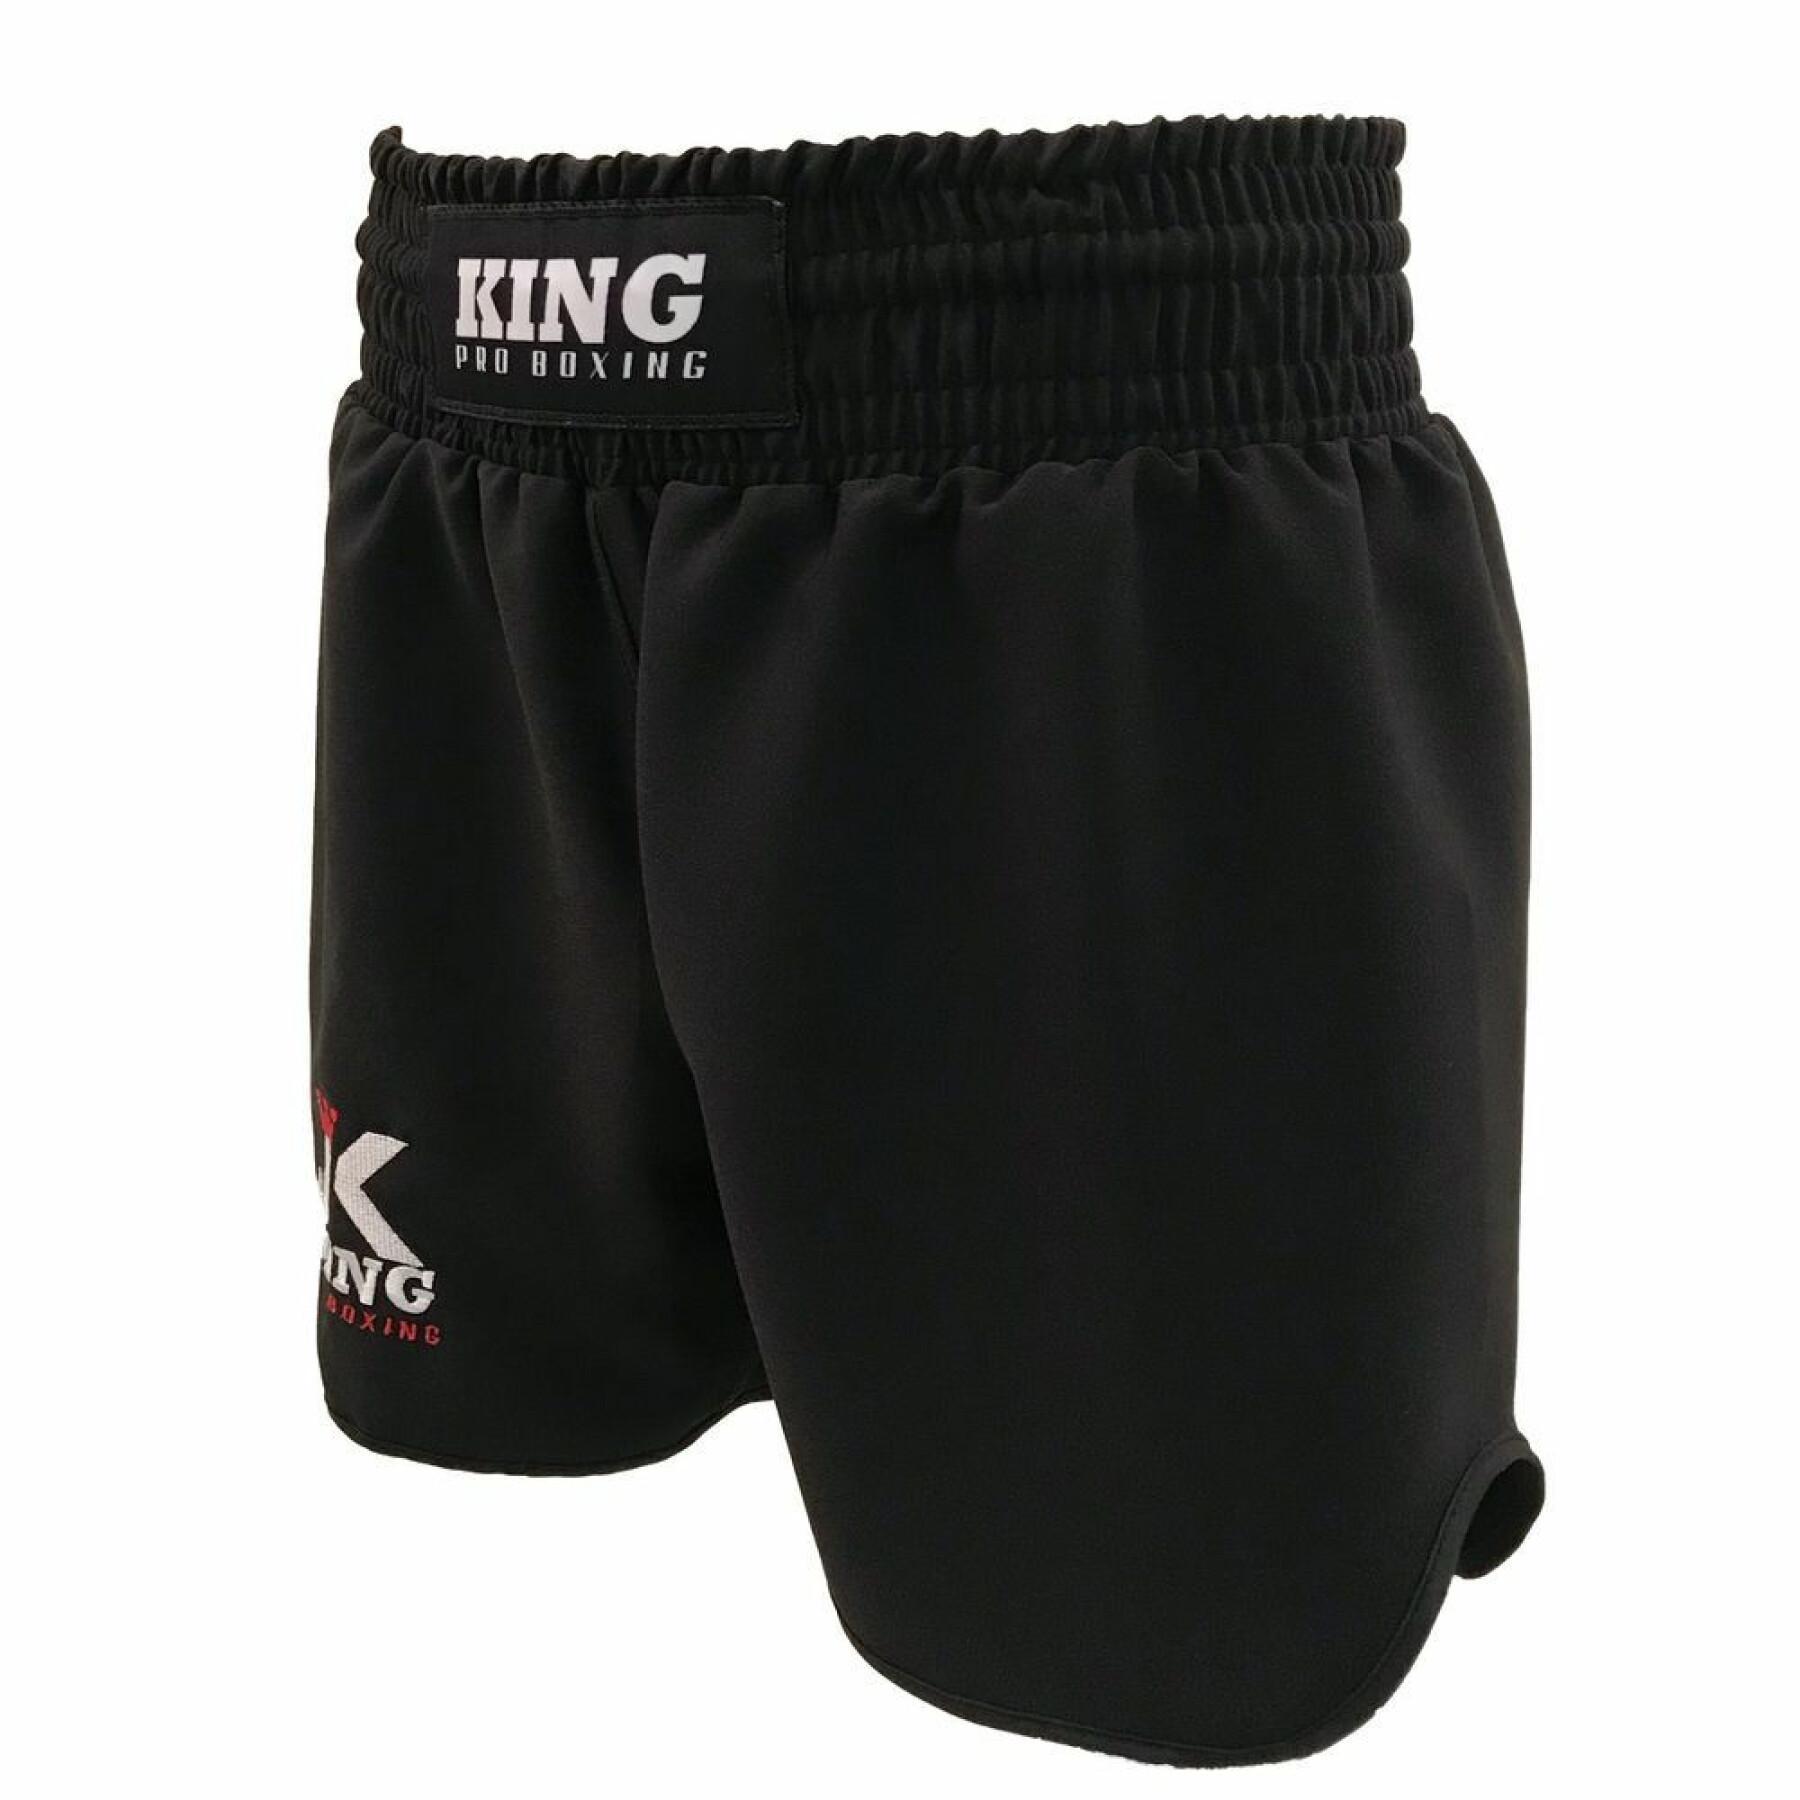 Calções de boxe tailandeses King Pro Boxing Stormking Basic